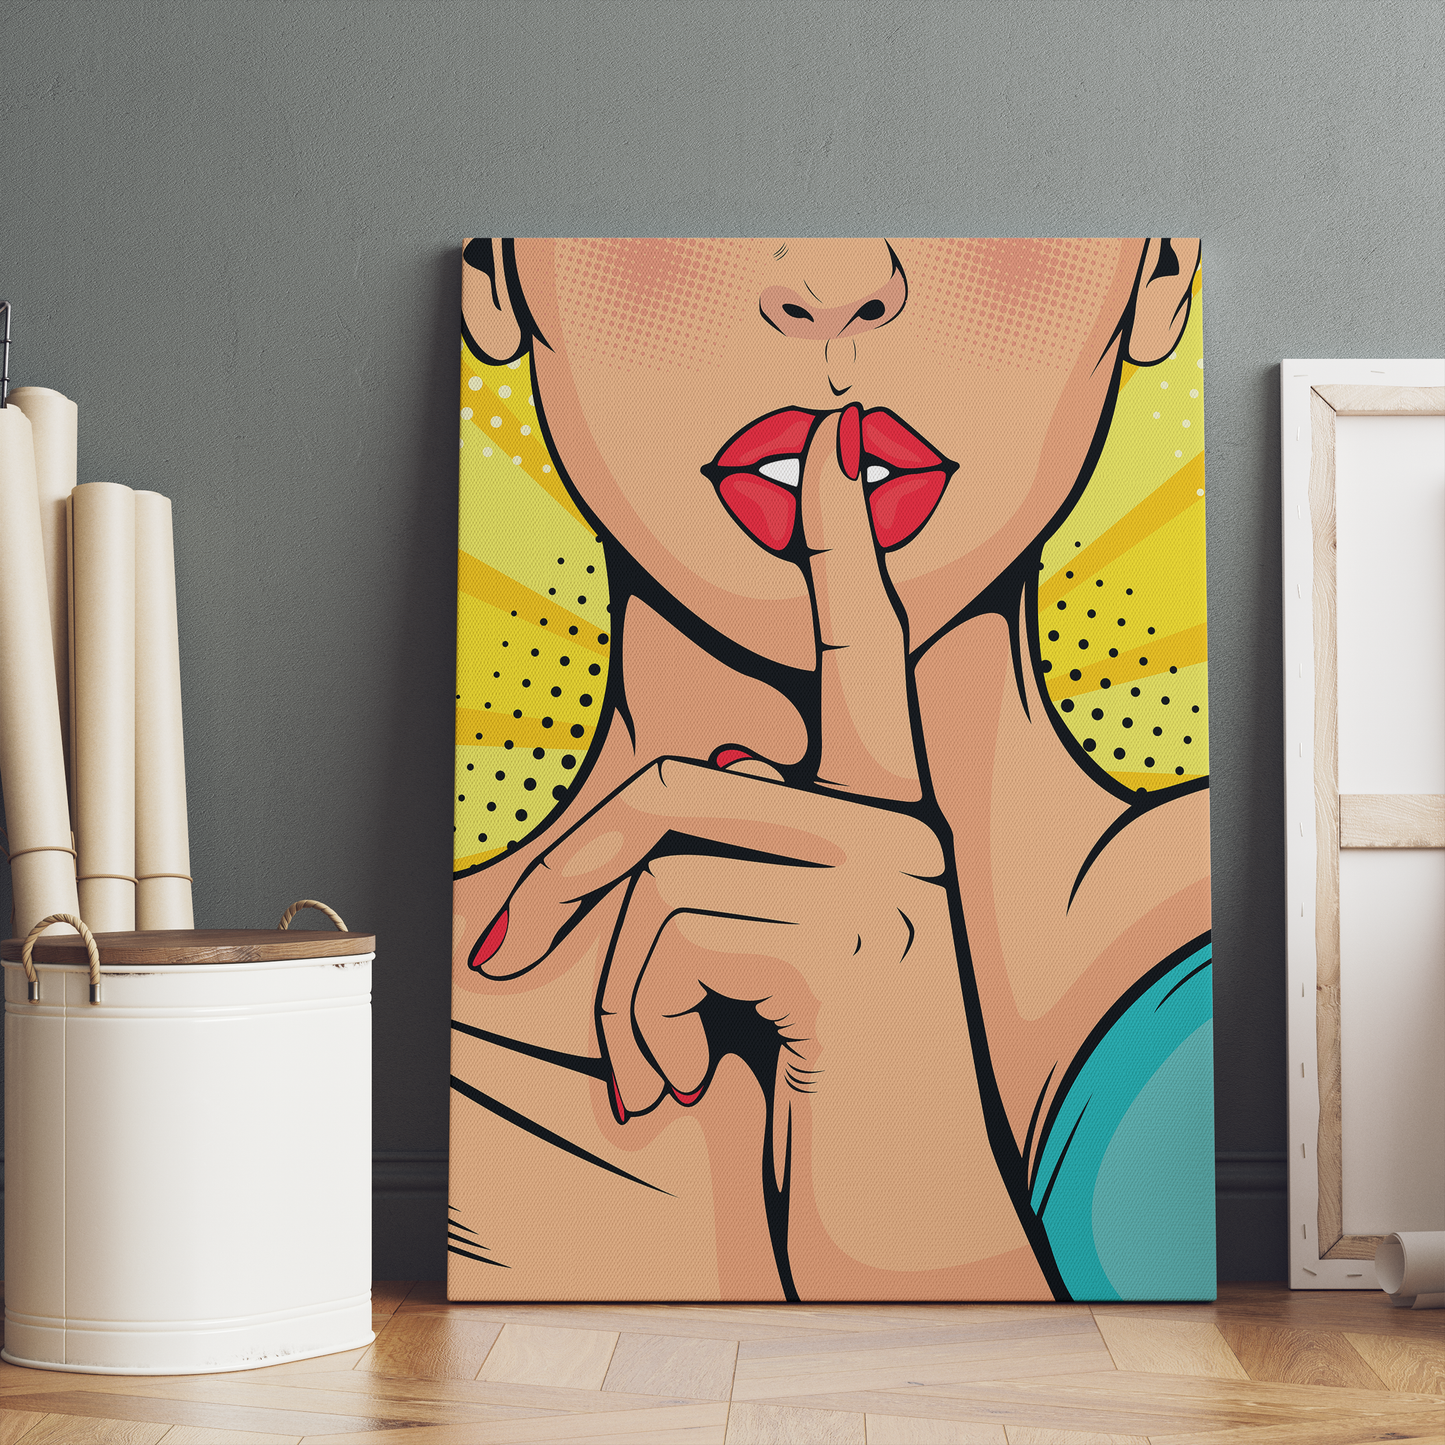 Shushh, Pop Art Woman Canvas Print